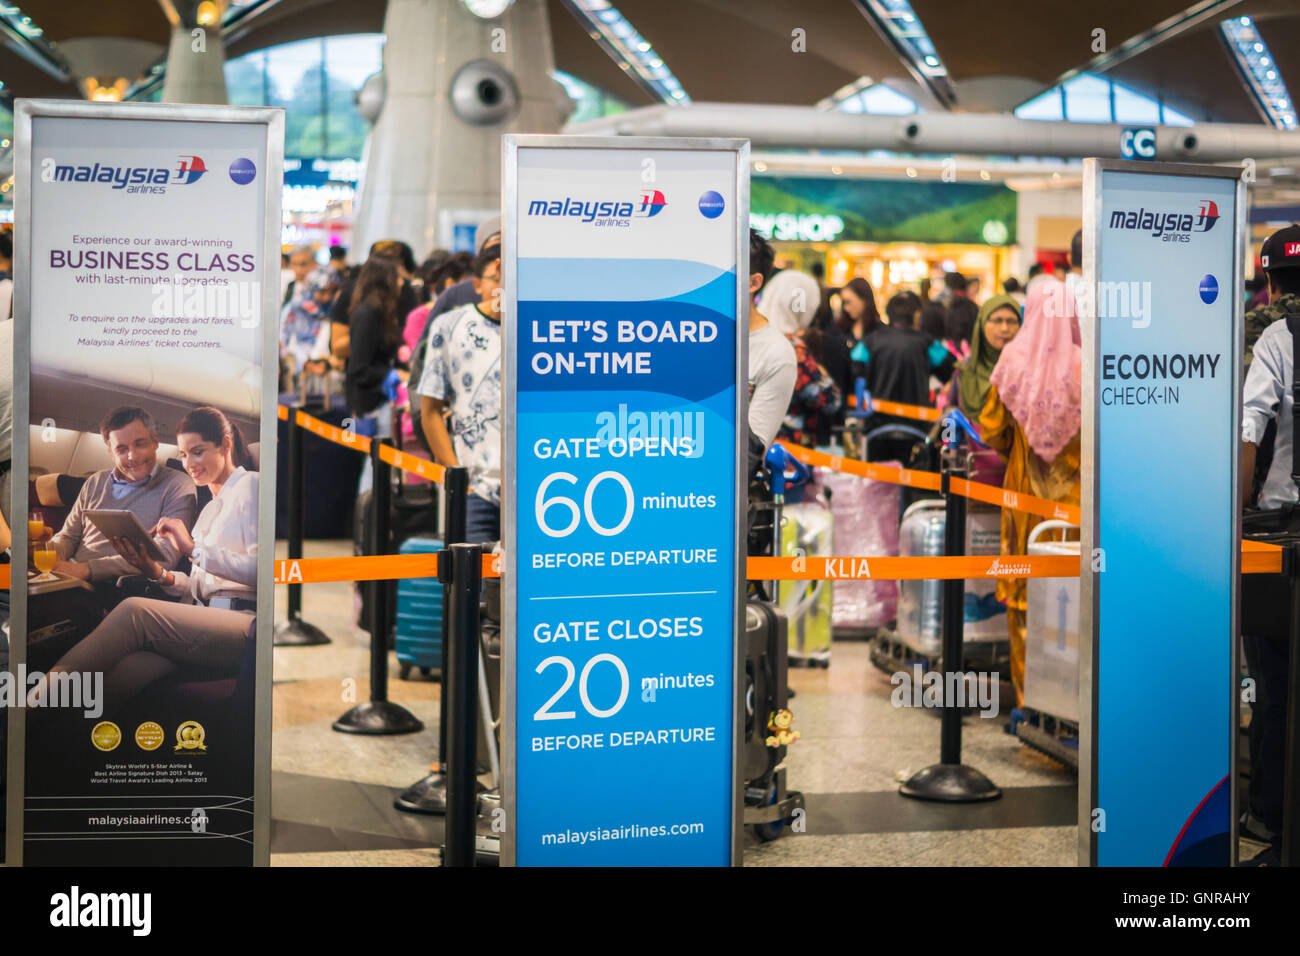 Kuala Lumpur, Malaysia - circa August 2016: Passengers at Malaysian Airlines check-in counter Kuala Lumpur international airport Stock Photo